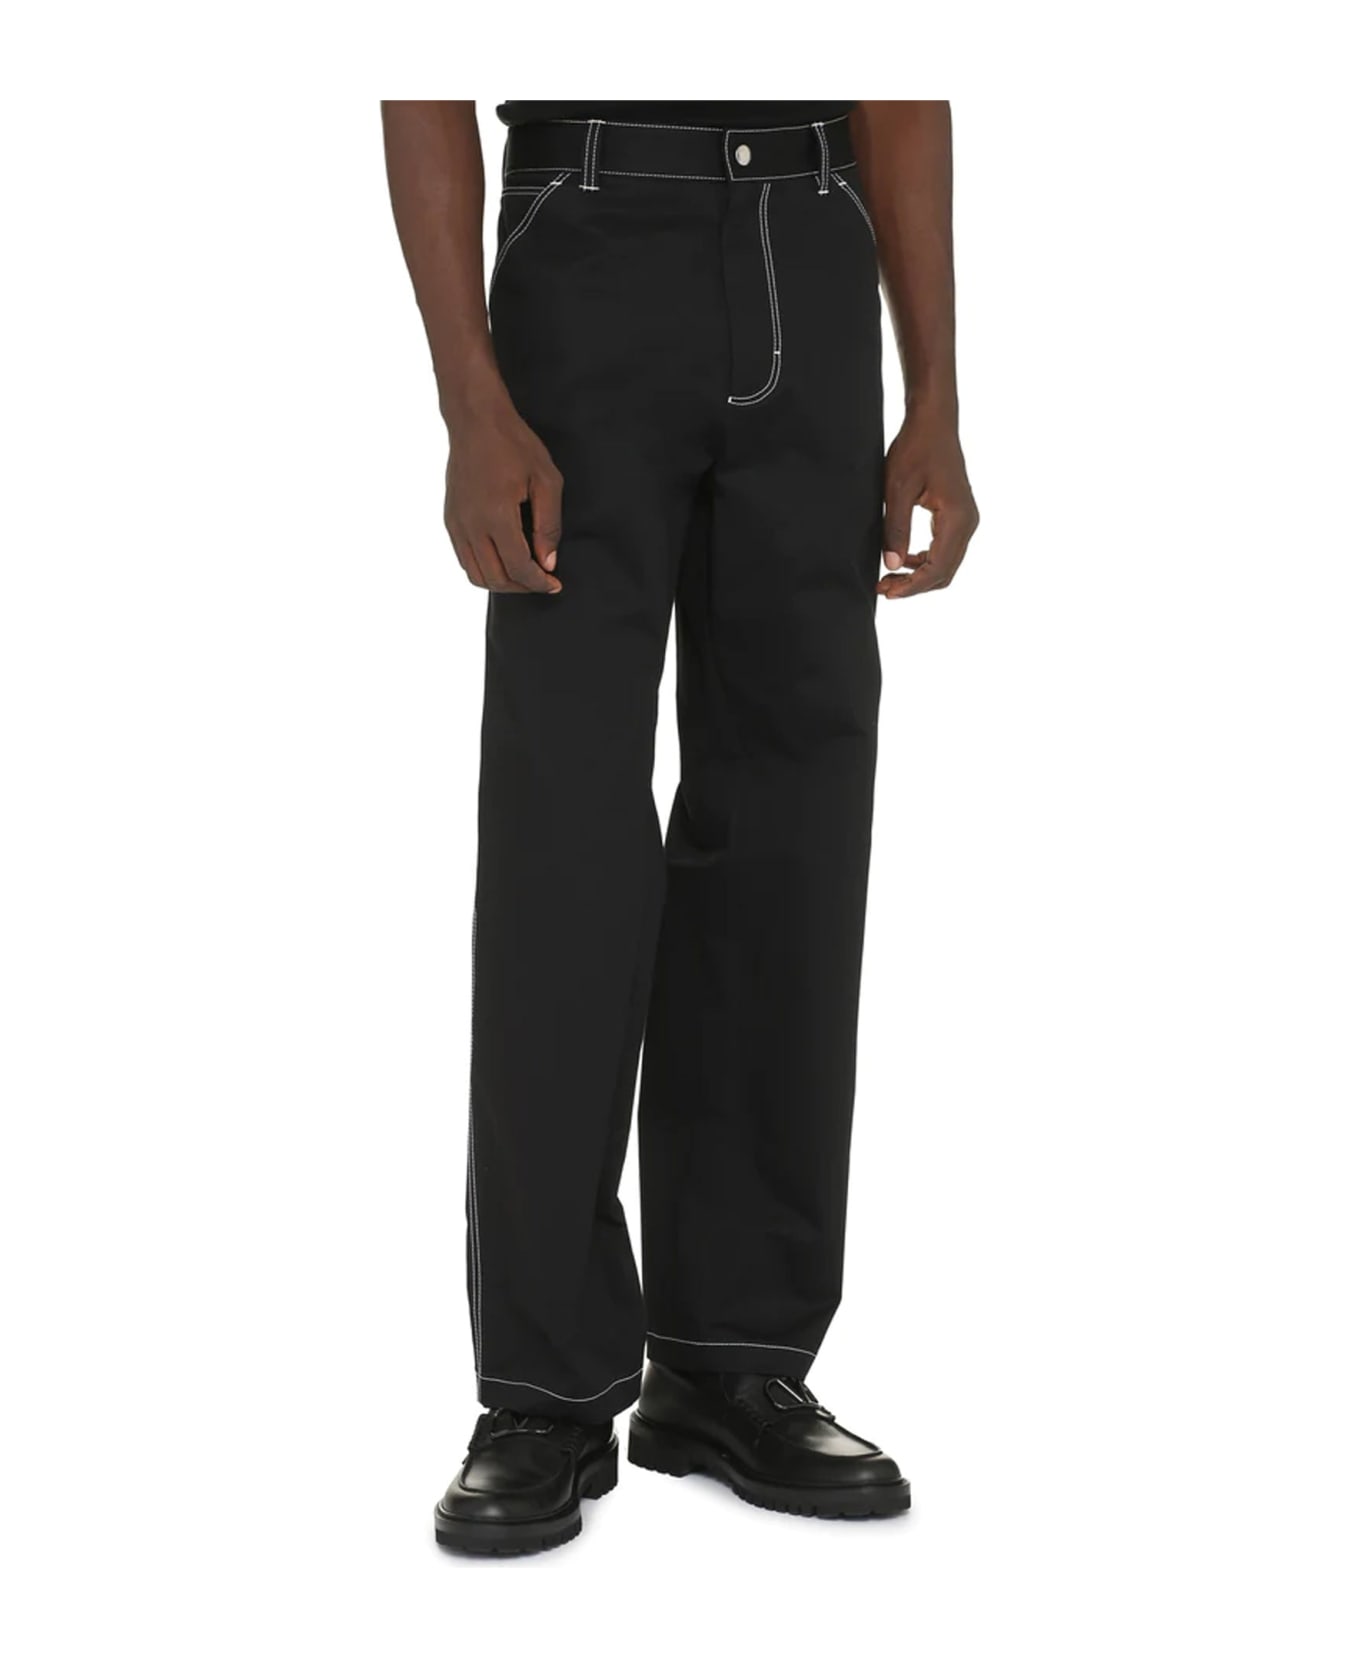 Prada Multi-pockets Cotton Pants - Black